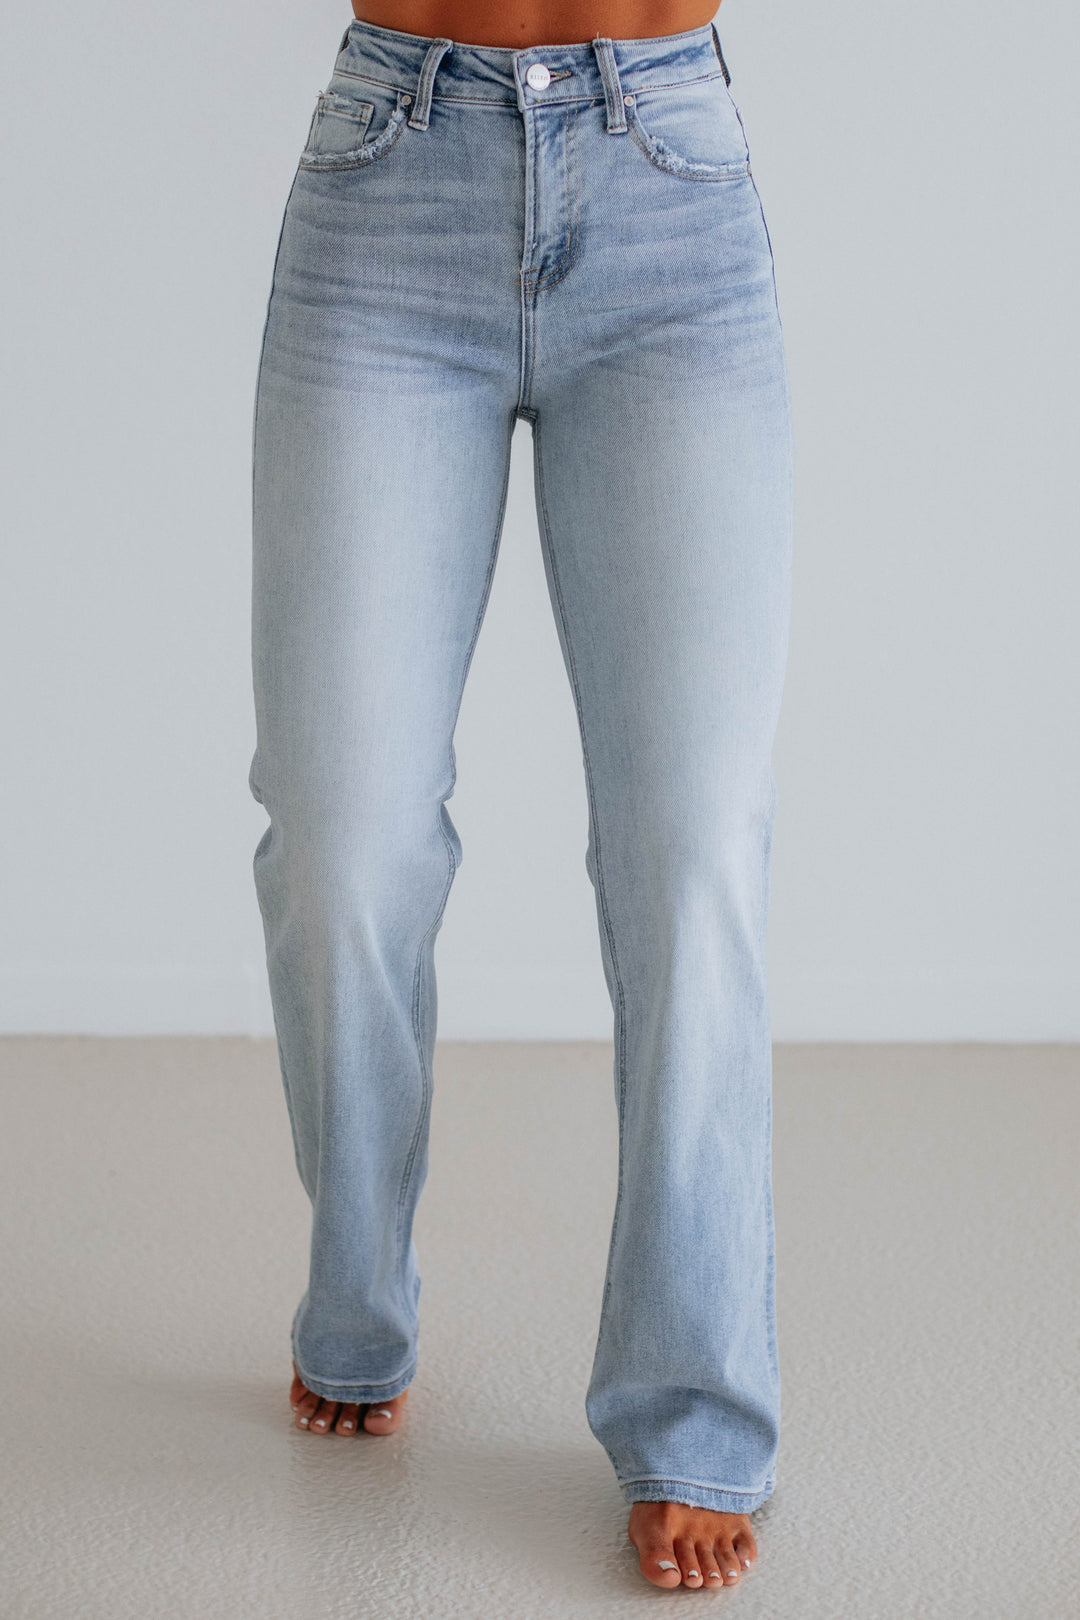 Maranie Risen Jeans